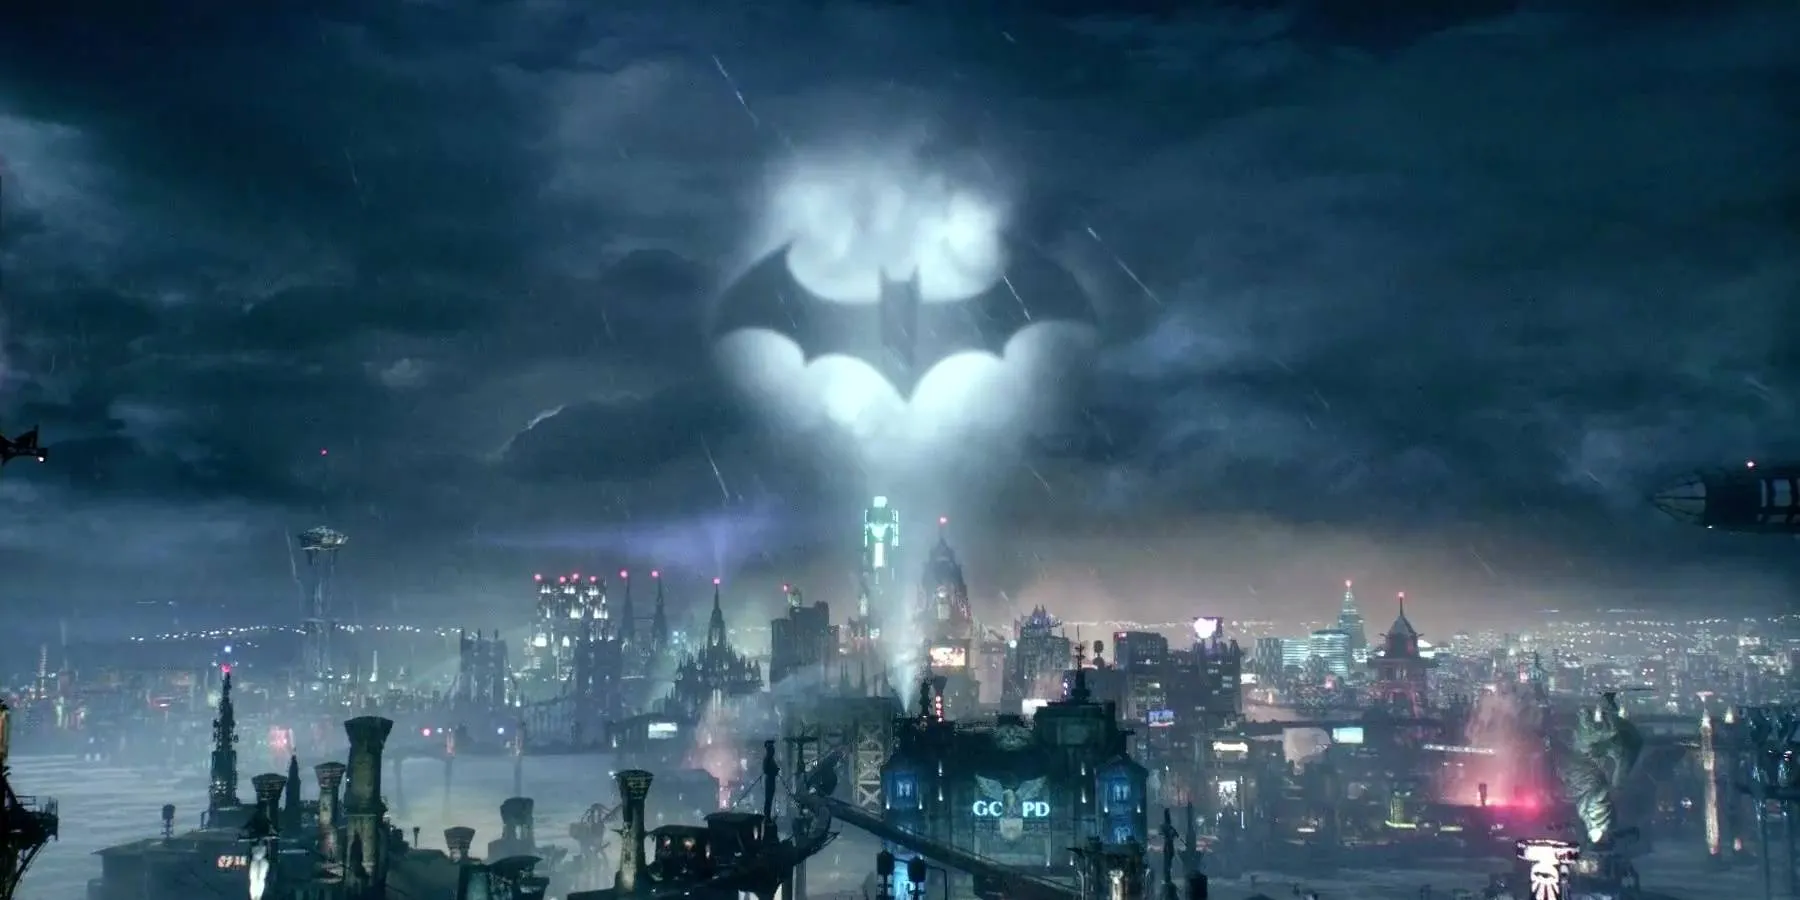 The Bat SGameTopical from Batman: Arkham Knight